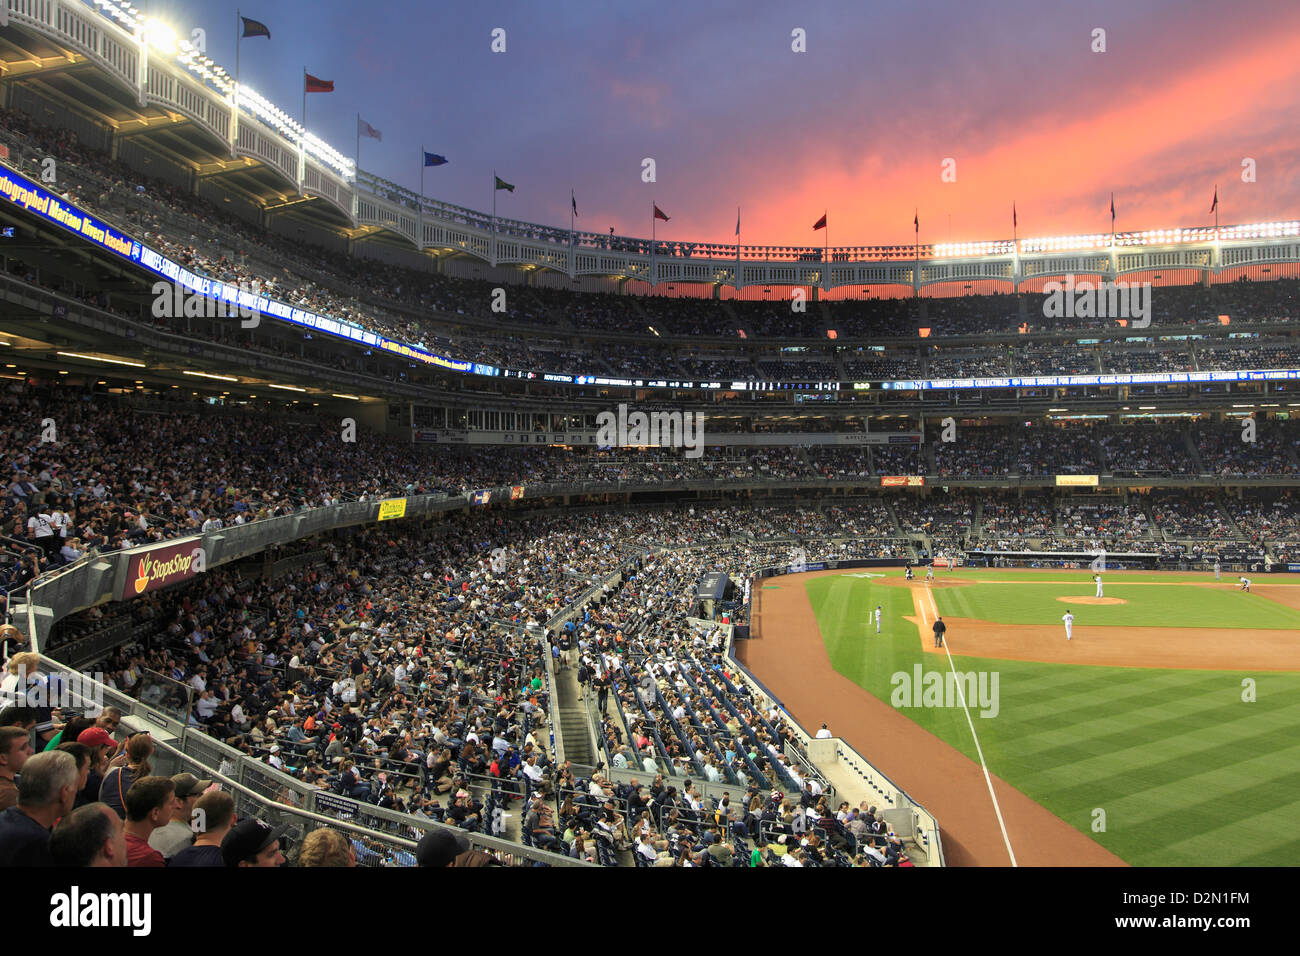 Baseball Skies in the Bronx 💙 - New York Yankees